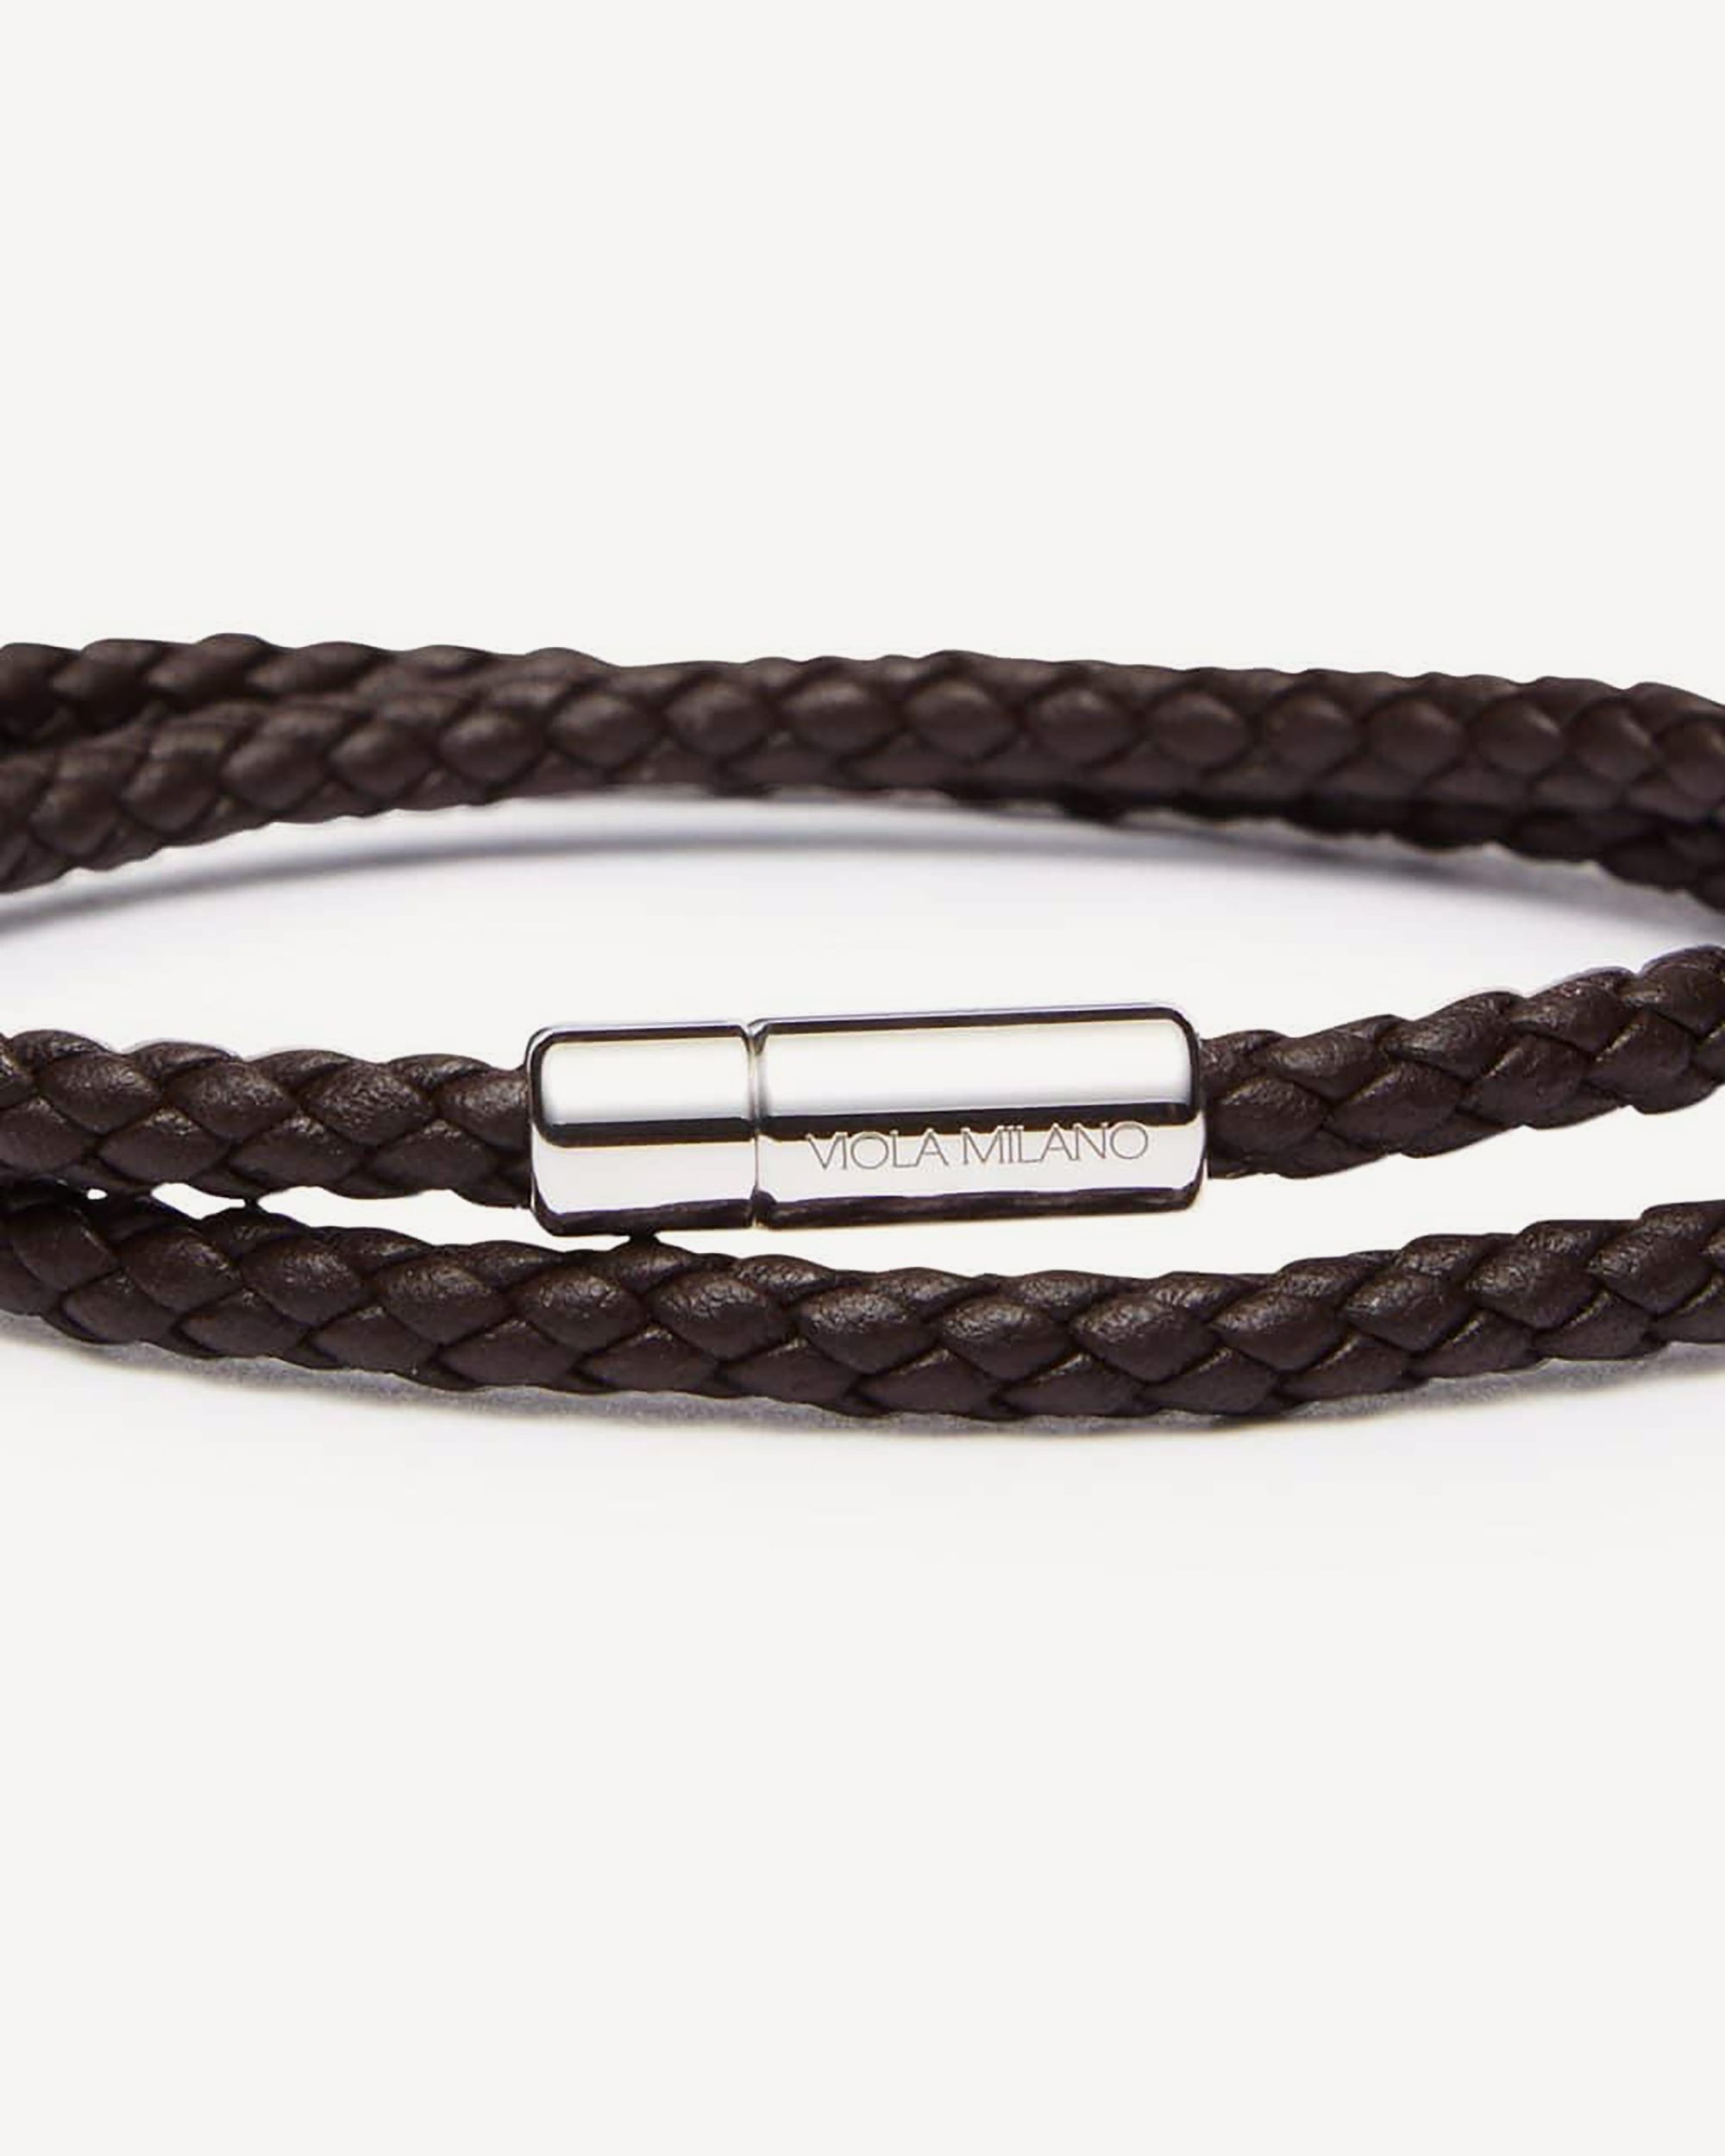 Double Braided Italian Leather bracelet - Brown